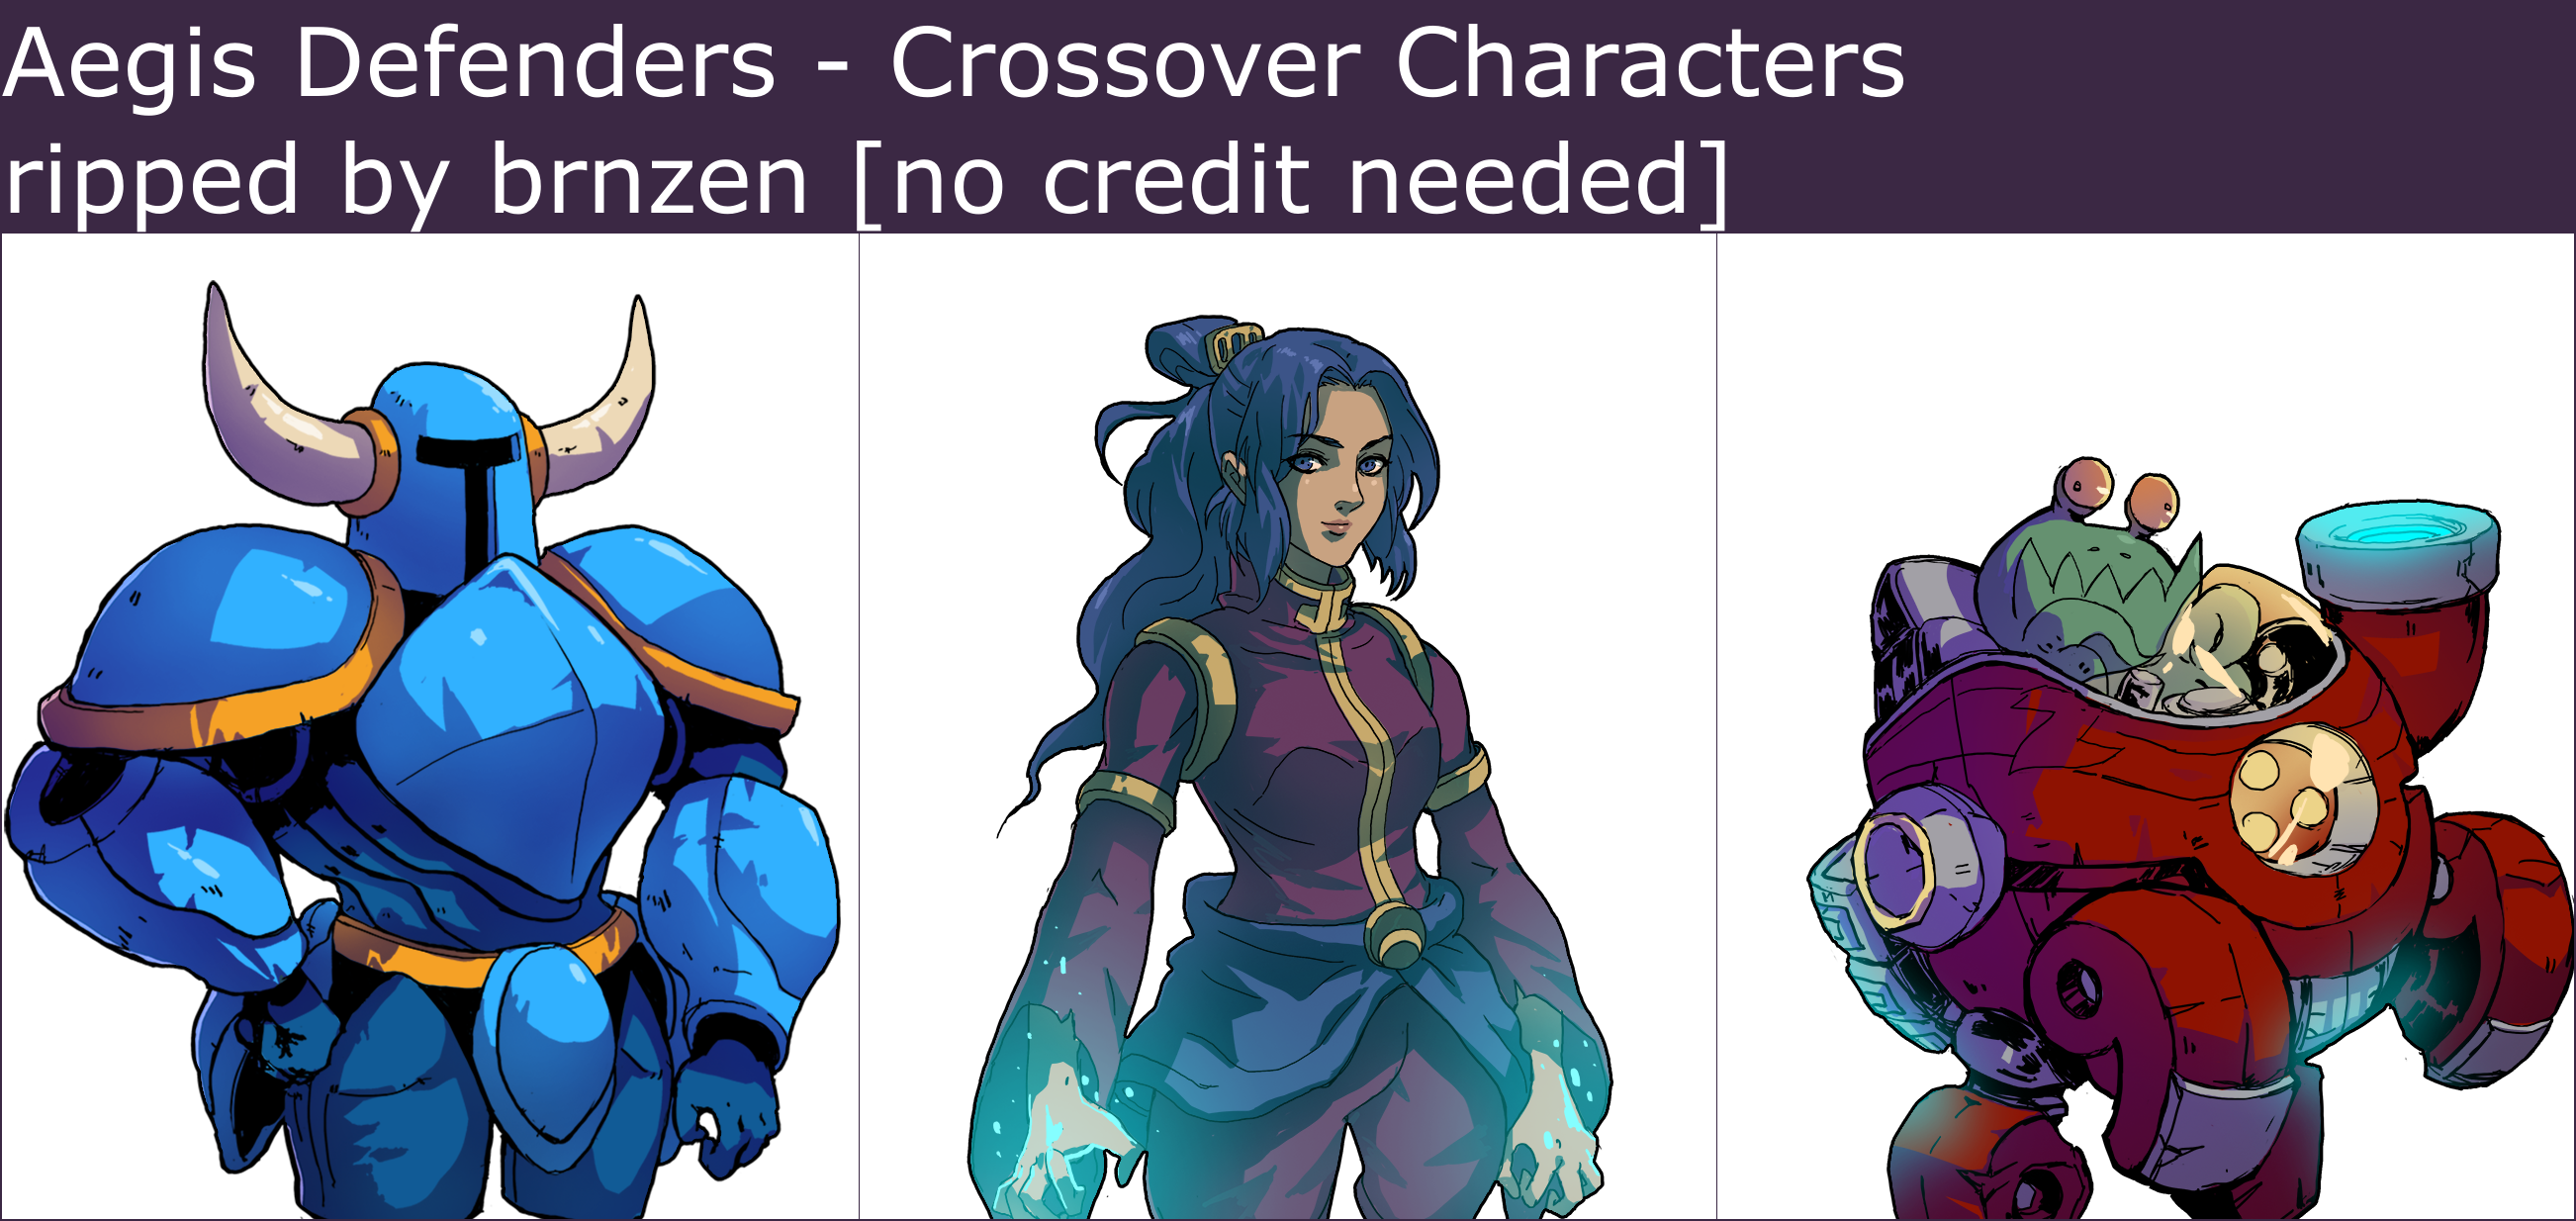 Aegis Defenders - Crossover Characters